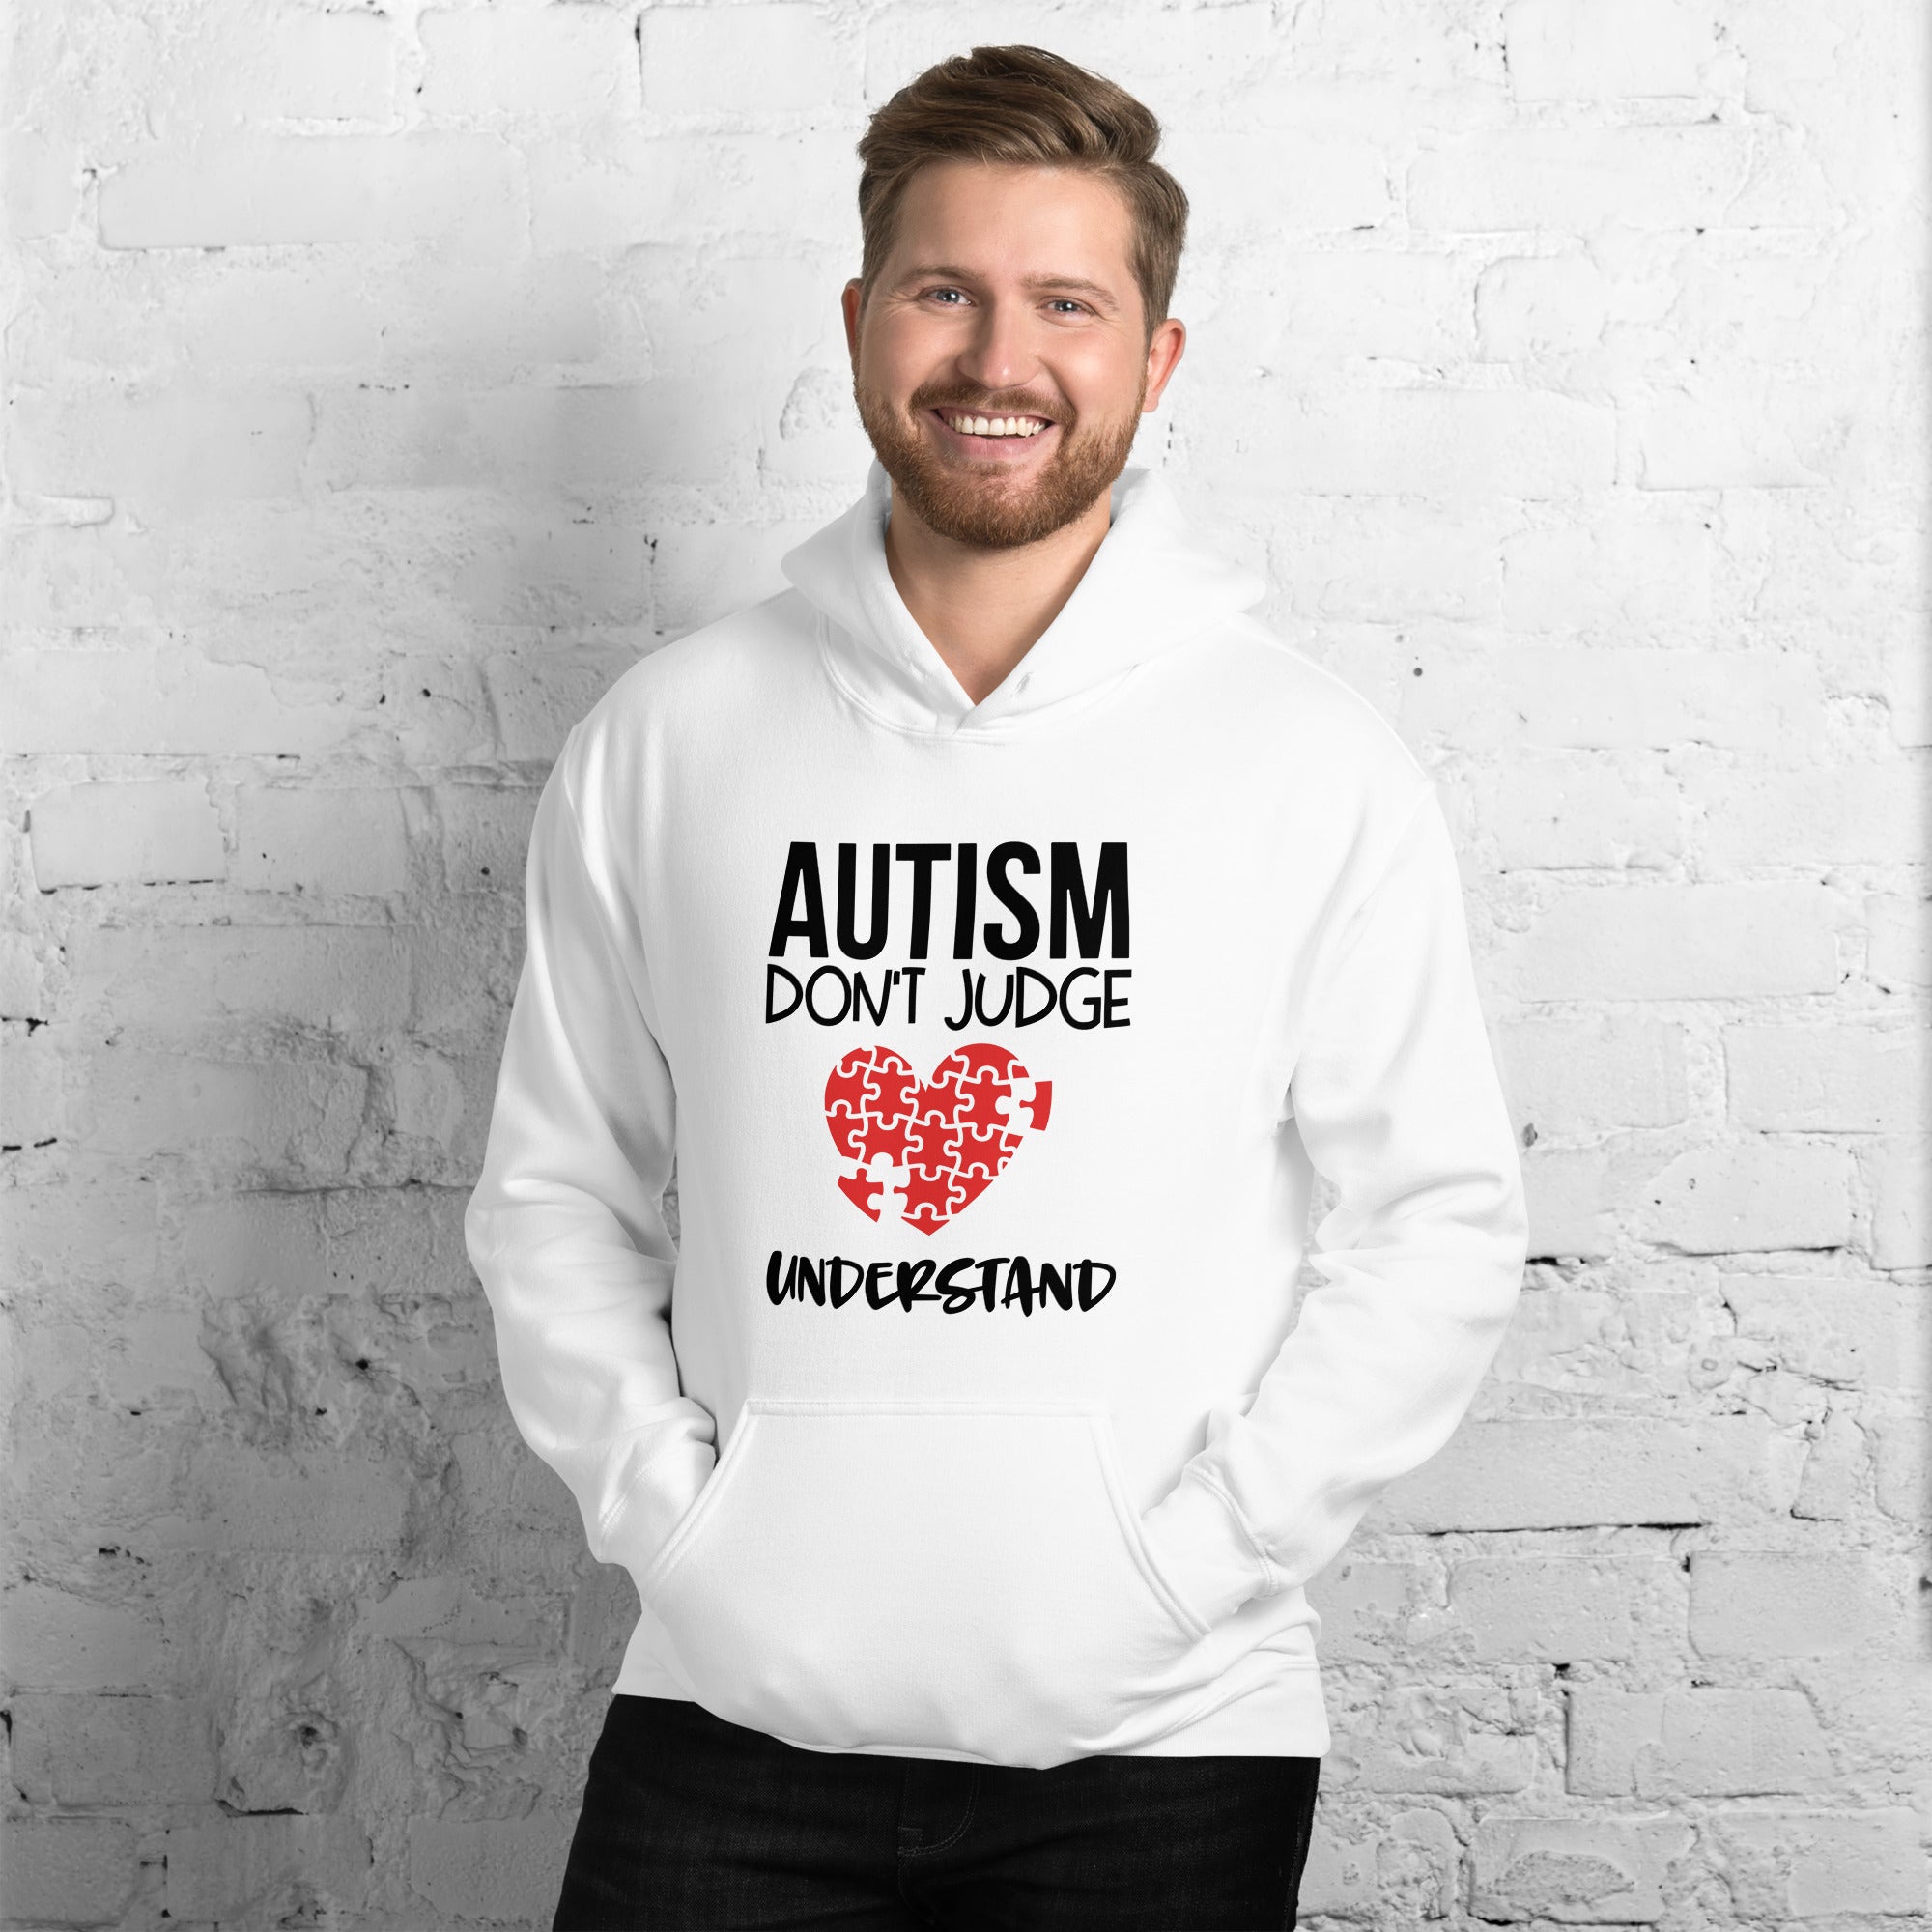 Unisex Hoodie- Autism don't judge understand